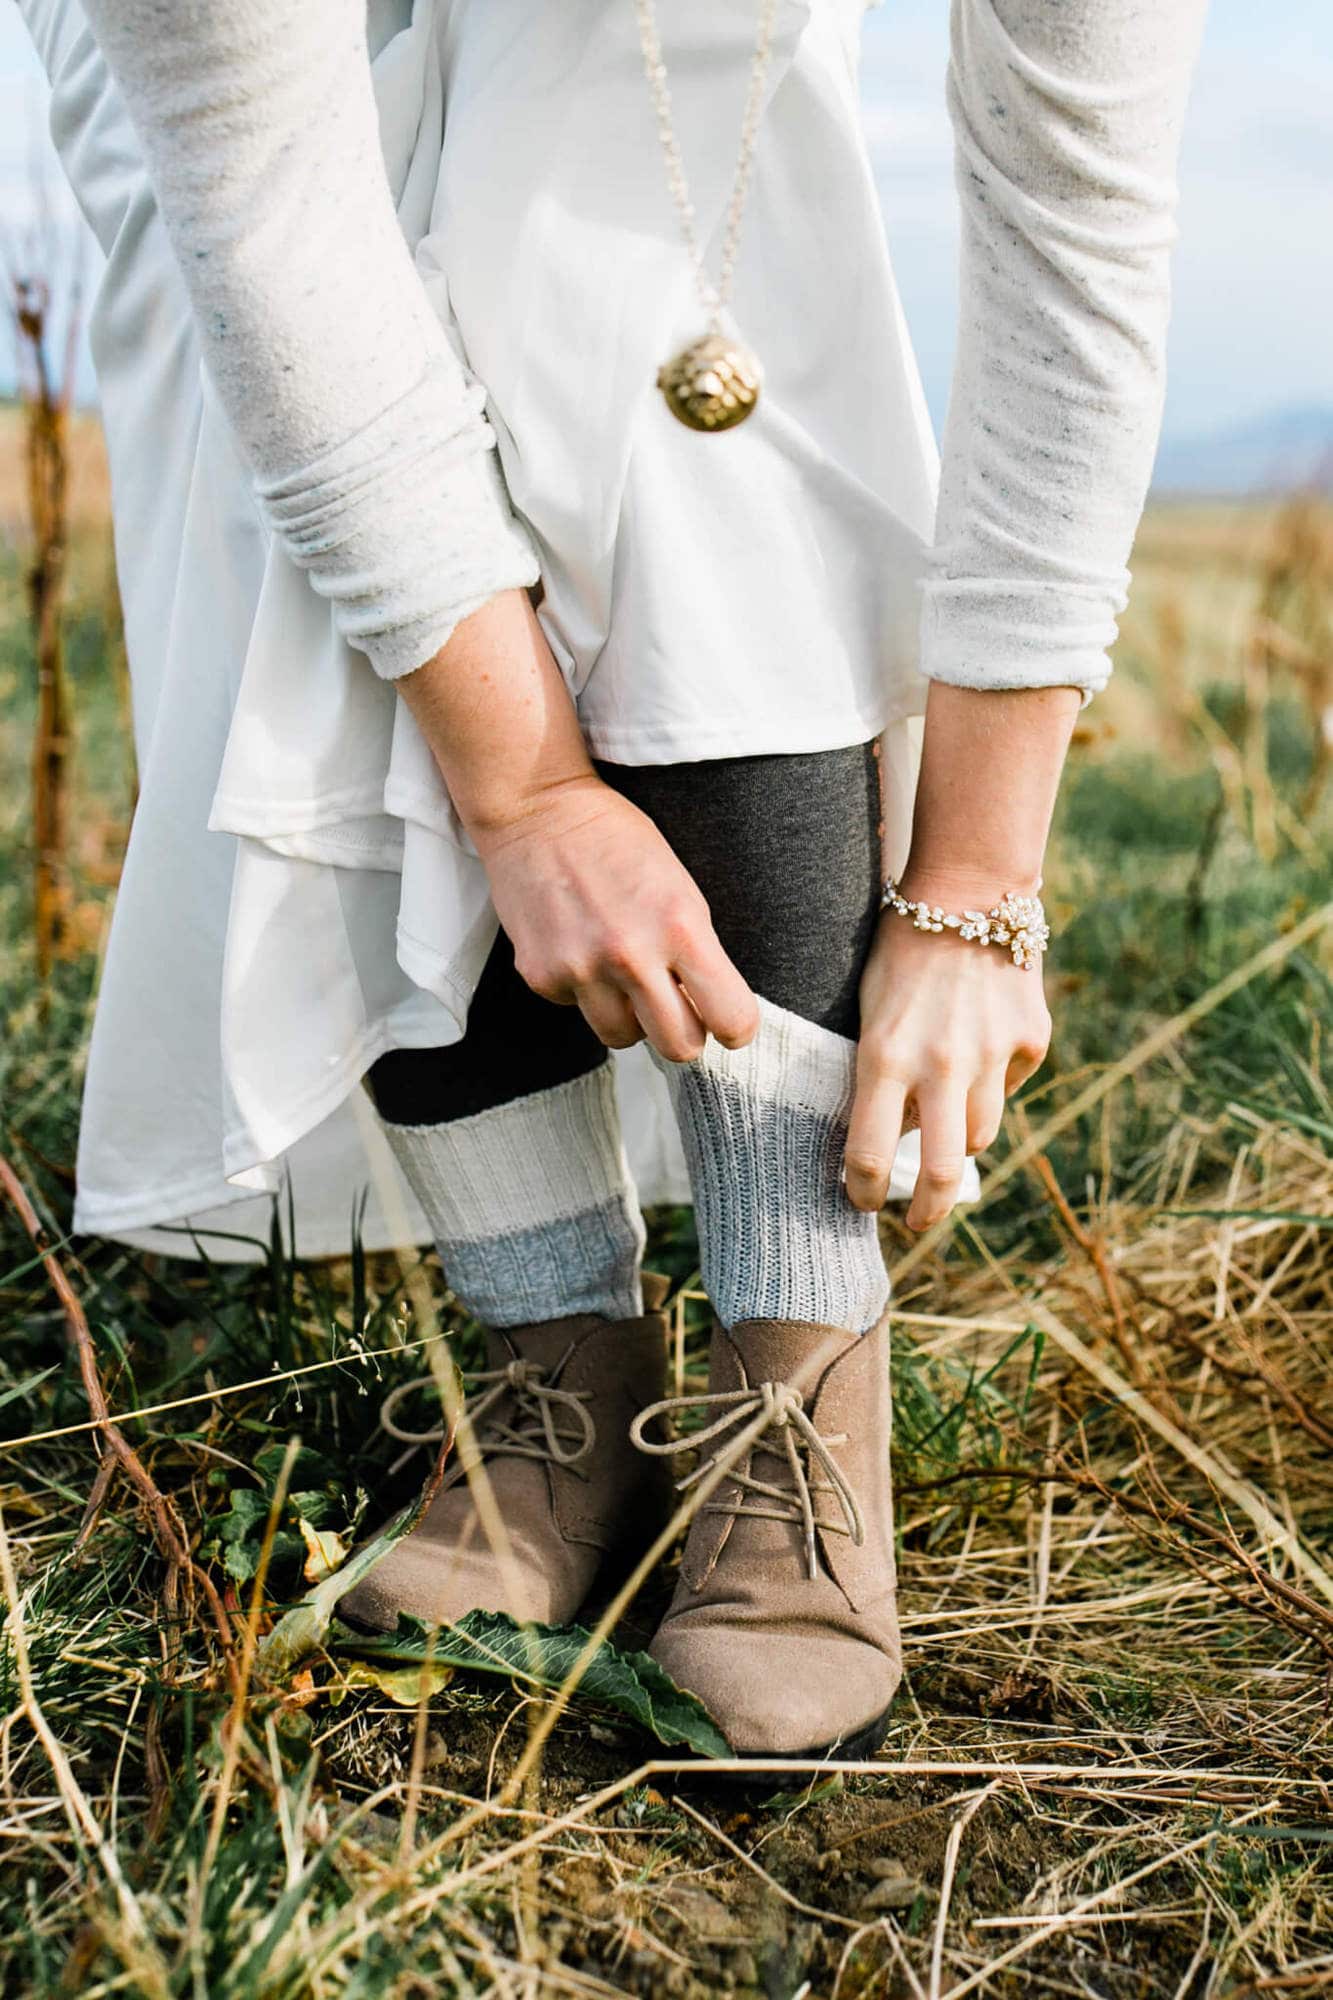 An adventure bride fixes her socks in an Iceland field.